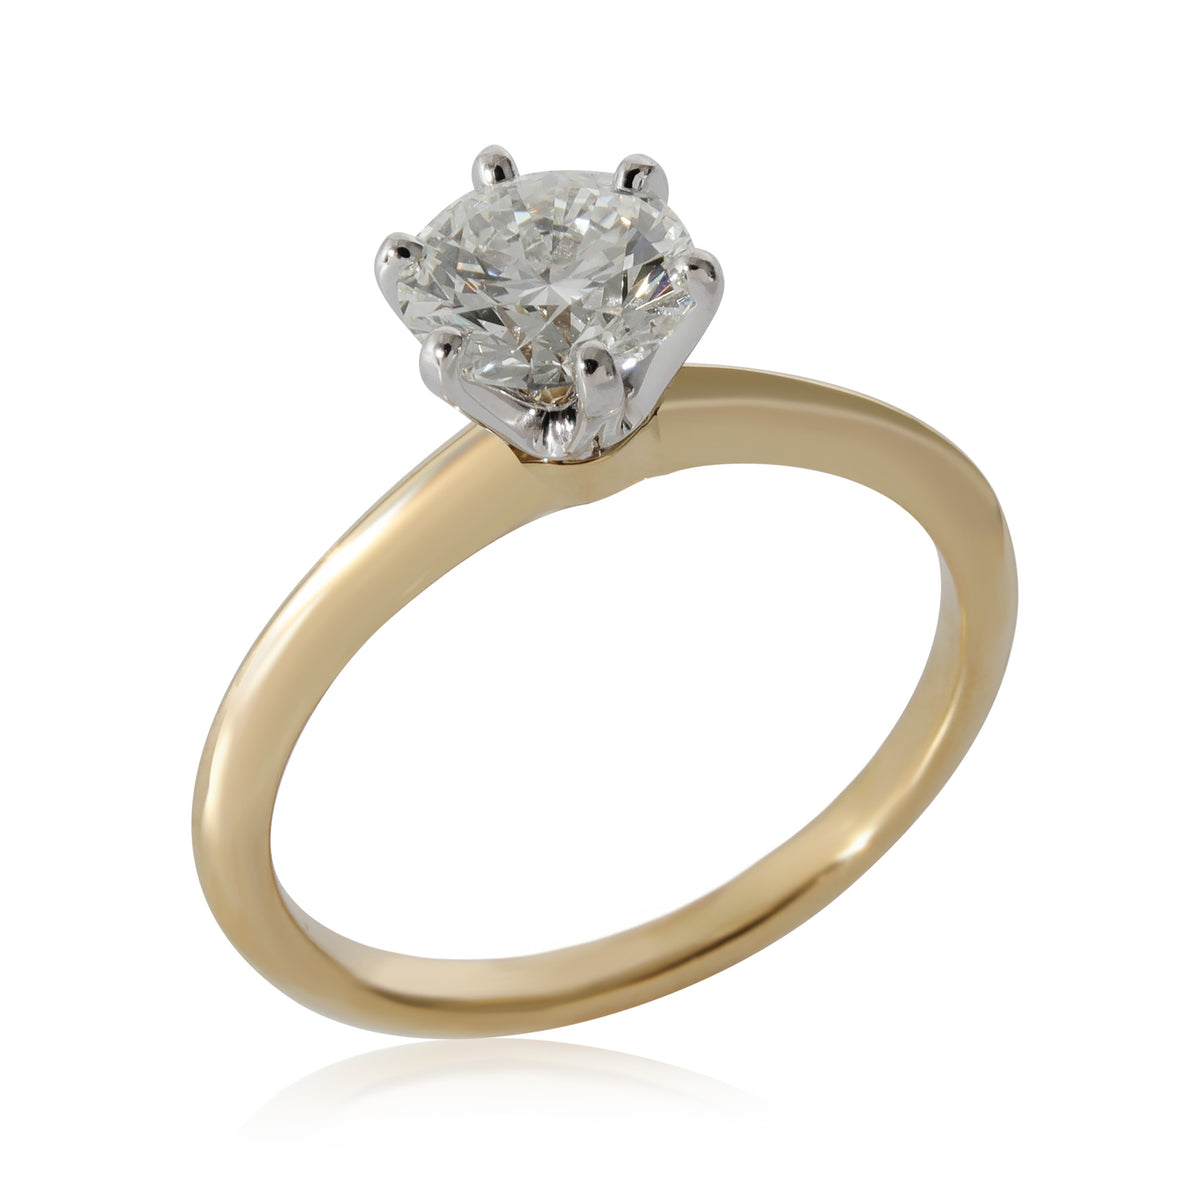 Tiffany & Co. Diamond Engagement Ring in 18k Yellow Gold/Platinum I VS1 0.98 ctw